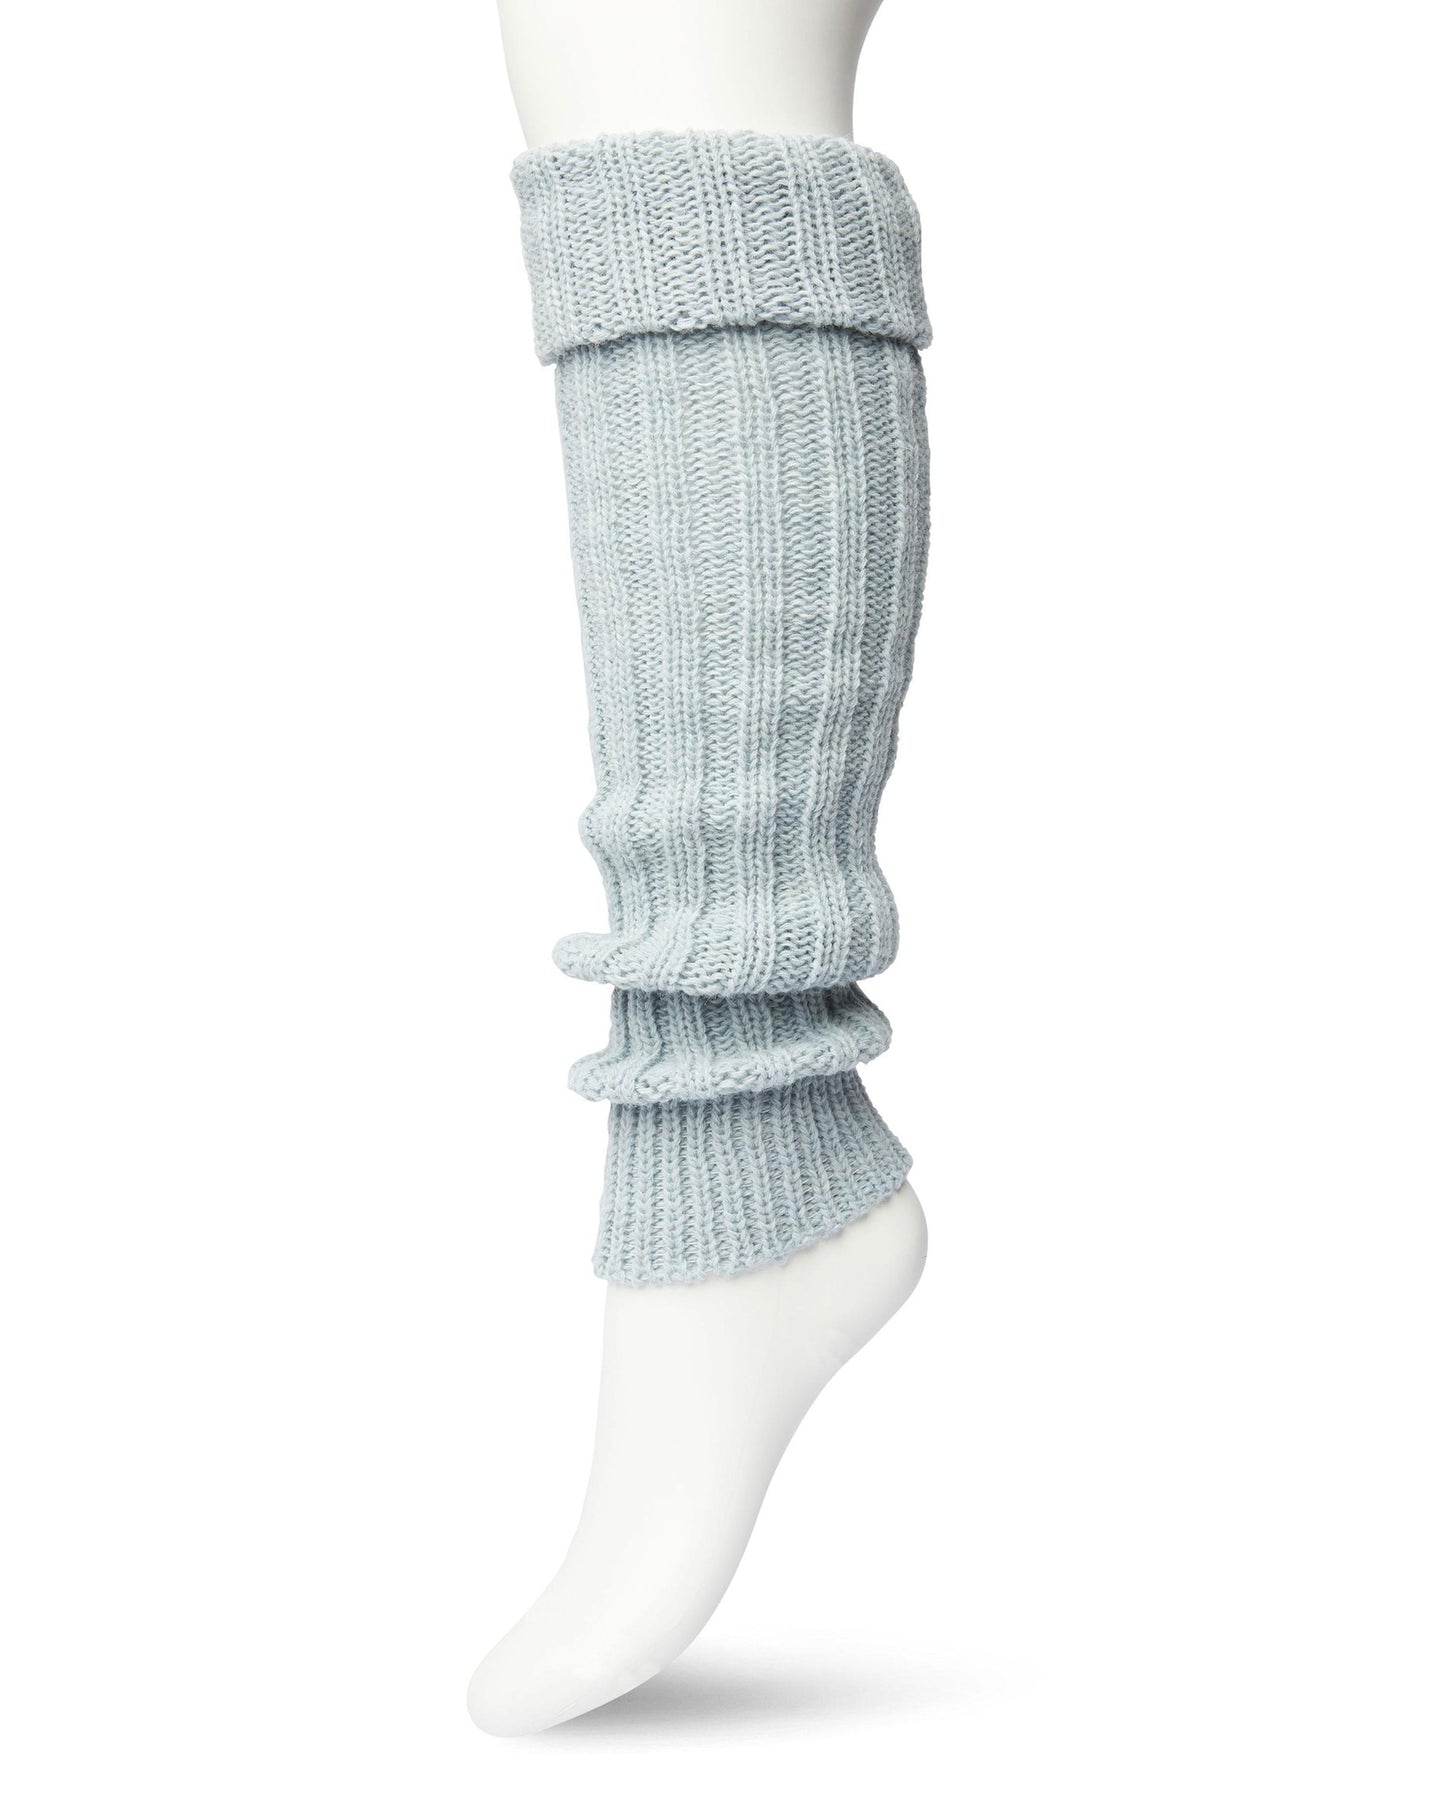 Bonnie Doon Sleever/Legwarmer BE021766 - pale egg shell blue wool mix chunky knitted leg warmers